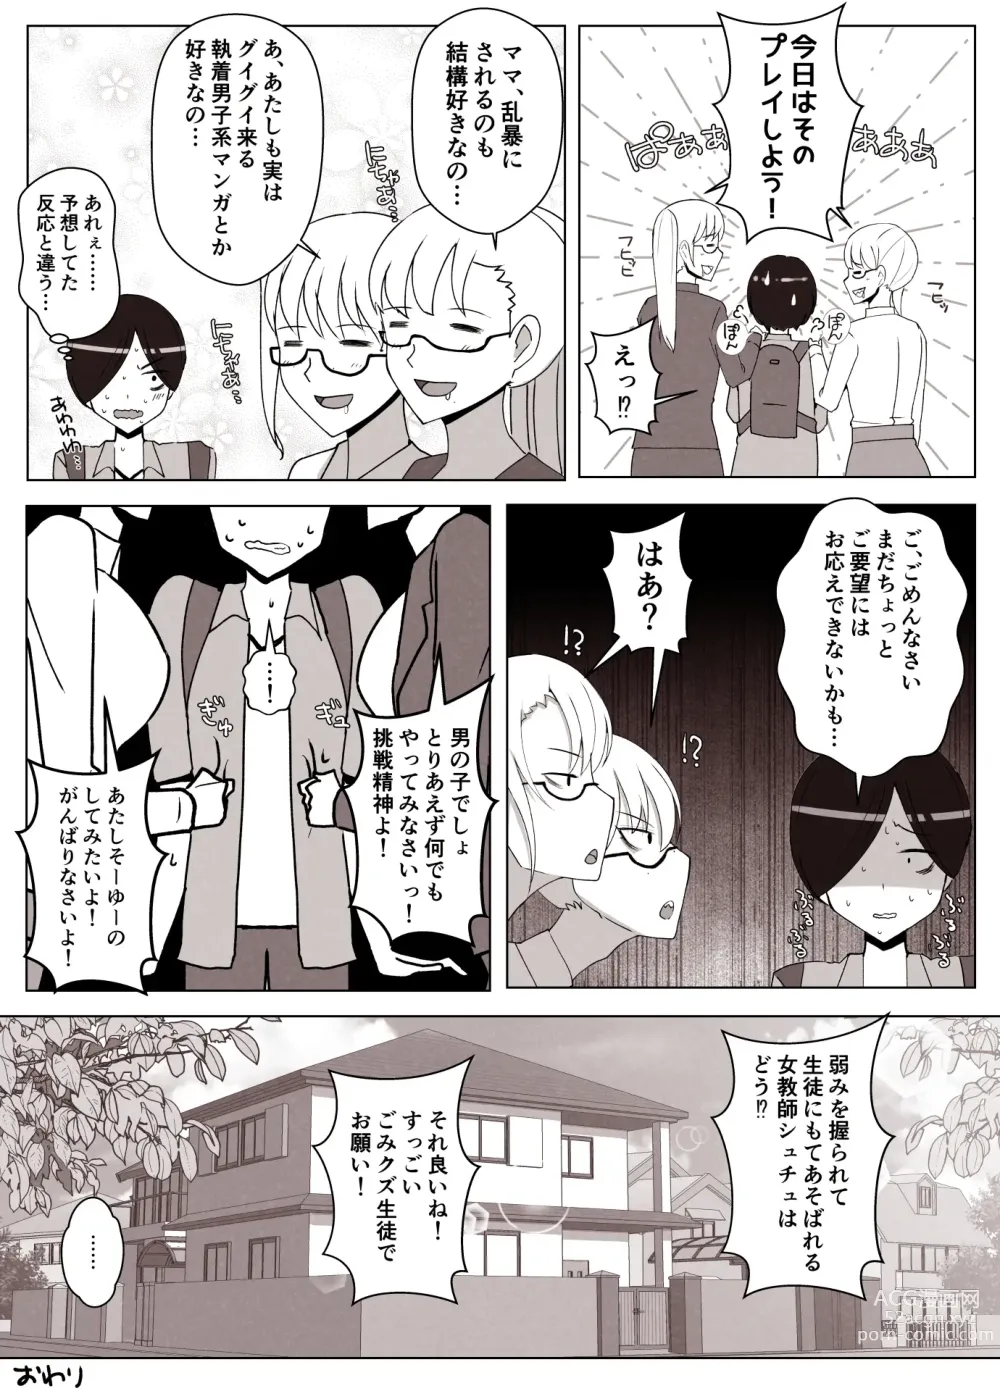 Page 63 of doujinshi Mama tte Yonde Ippai Amaete 2